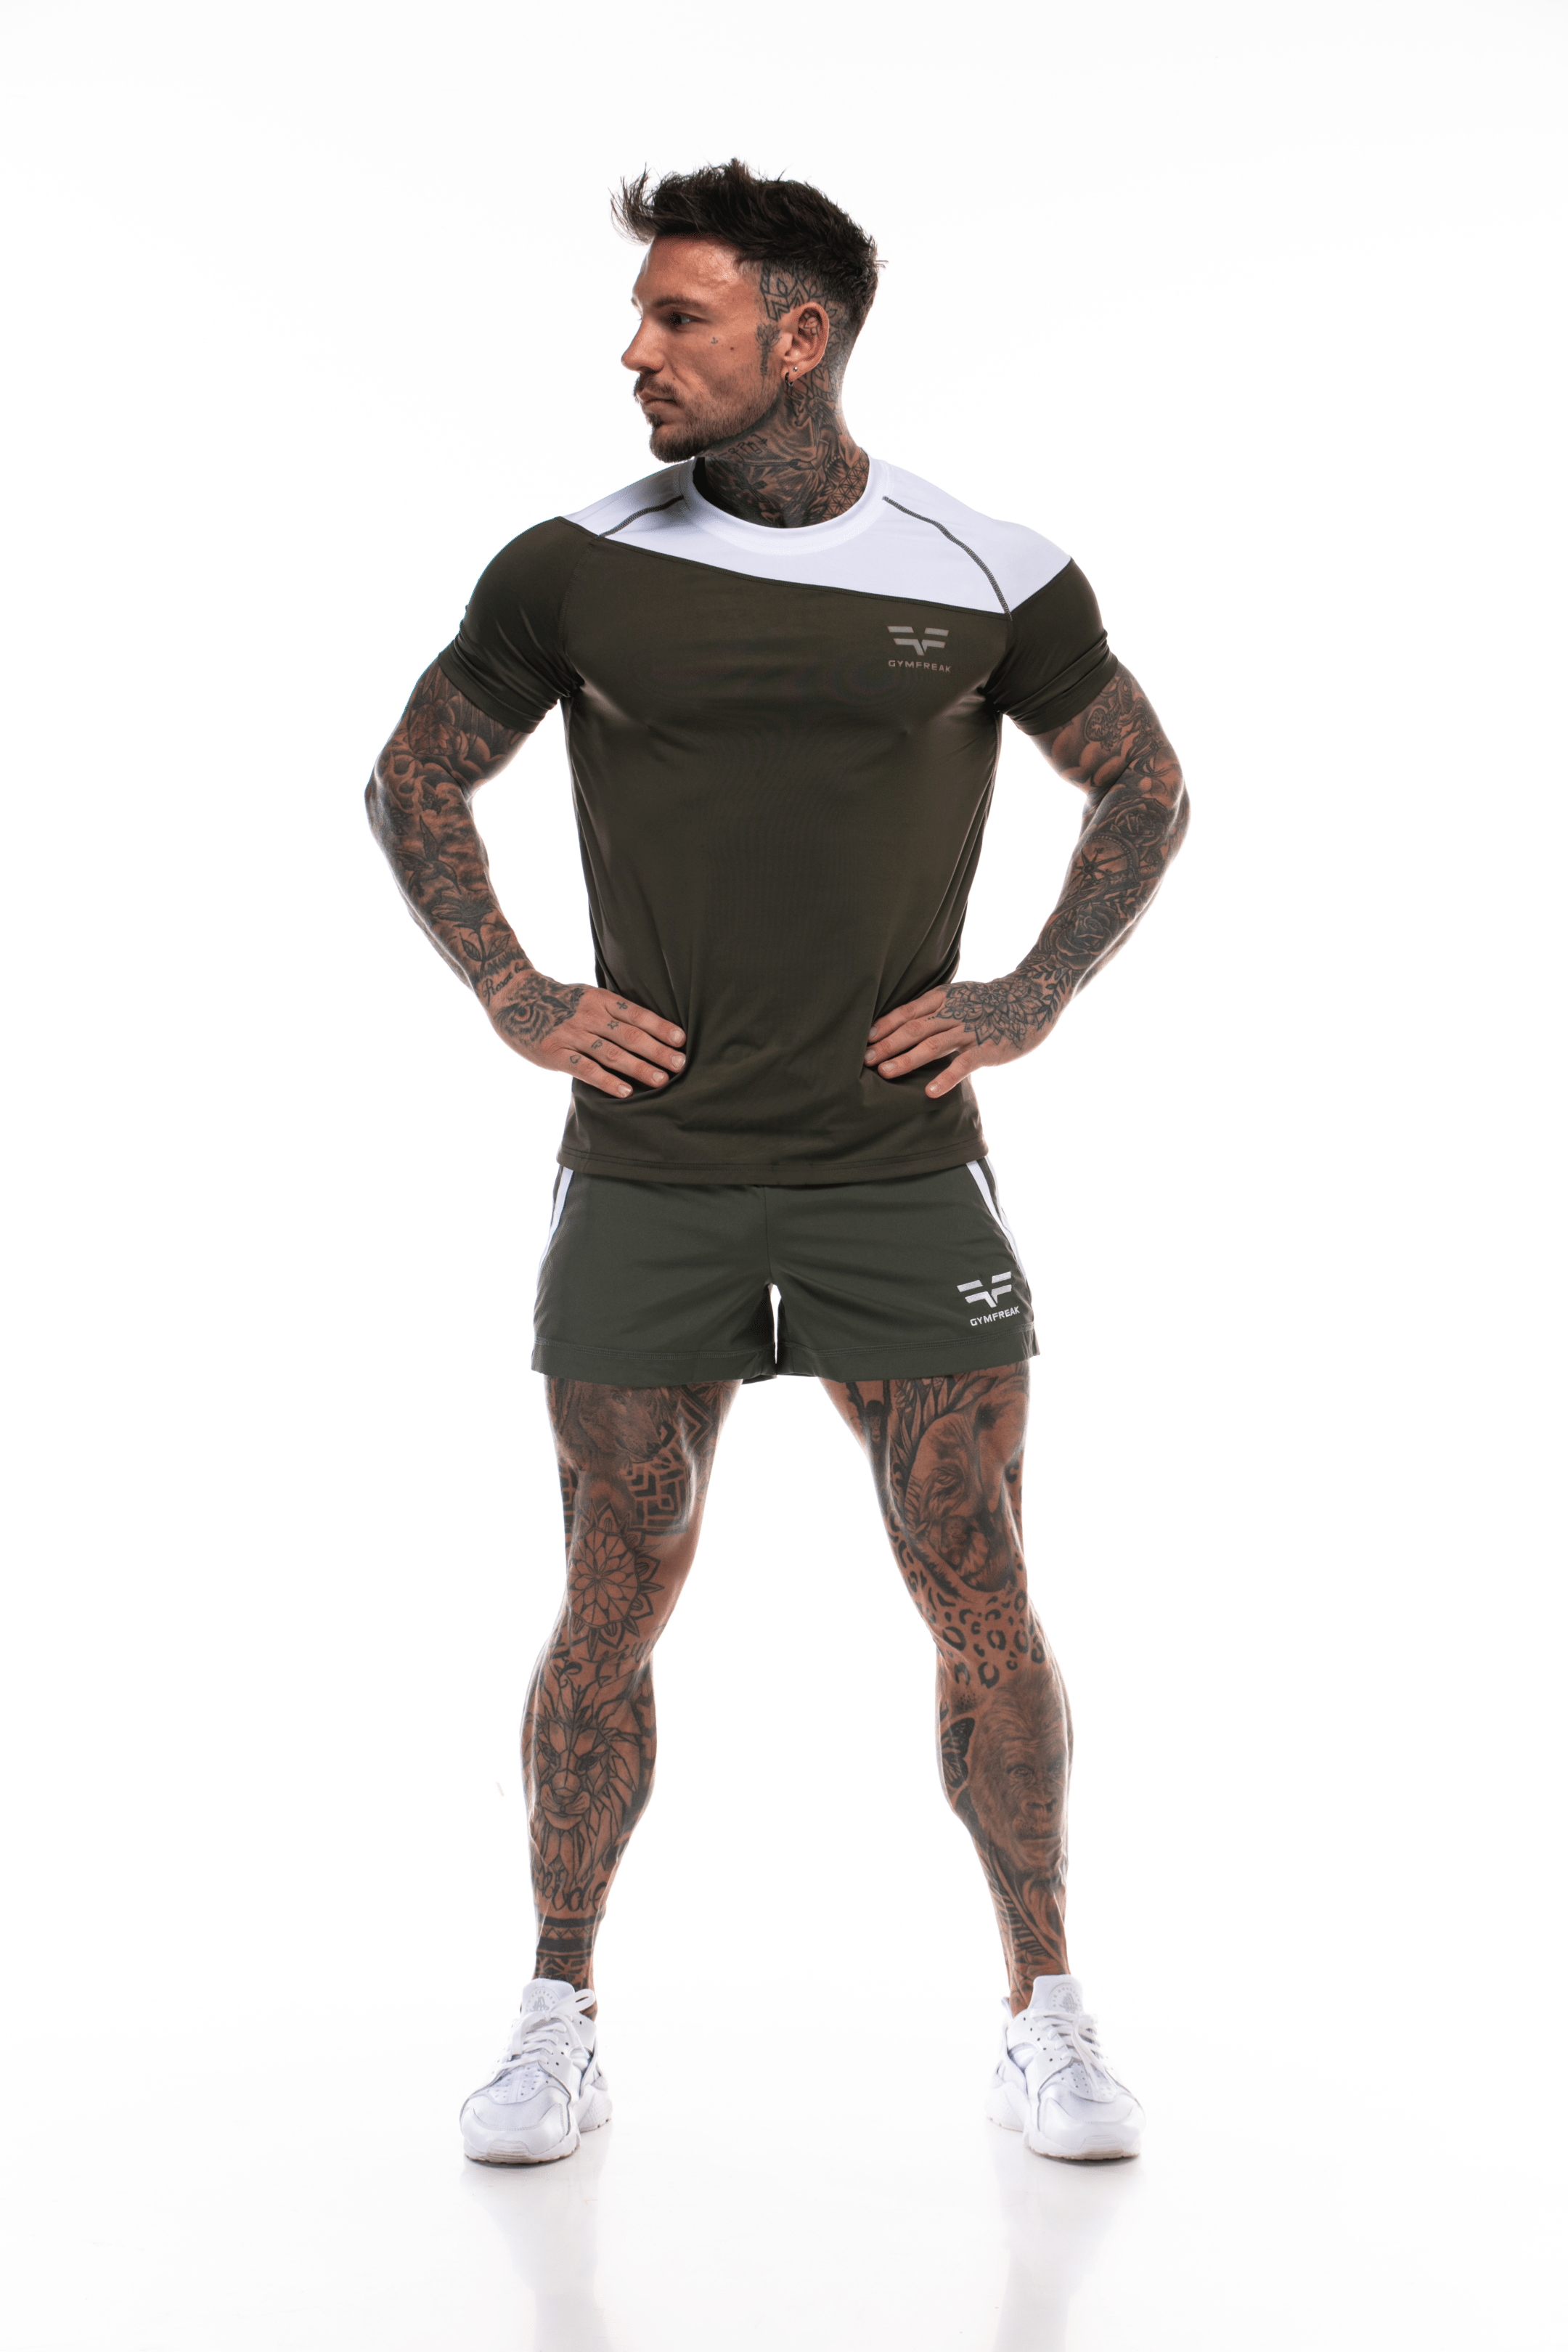 GymFreak Mens Pro Shorts - Khaki - 3.5 inch